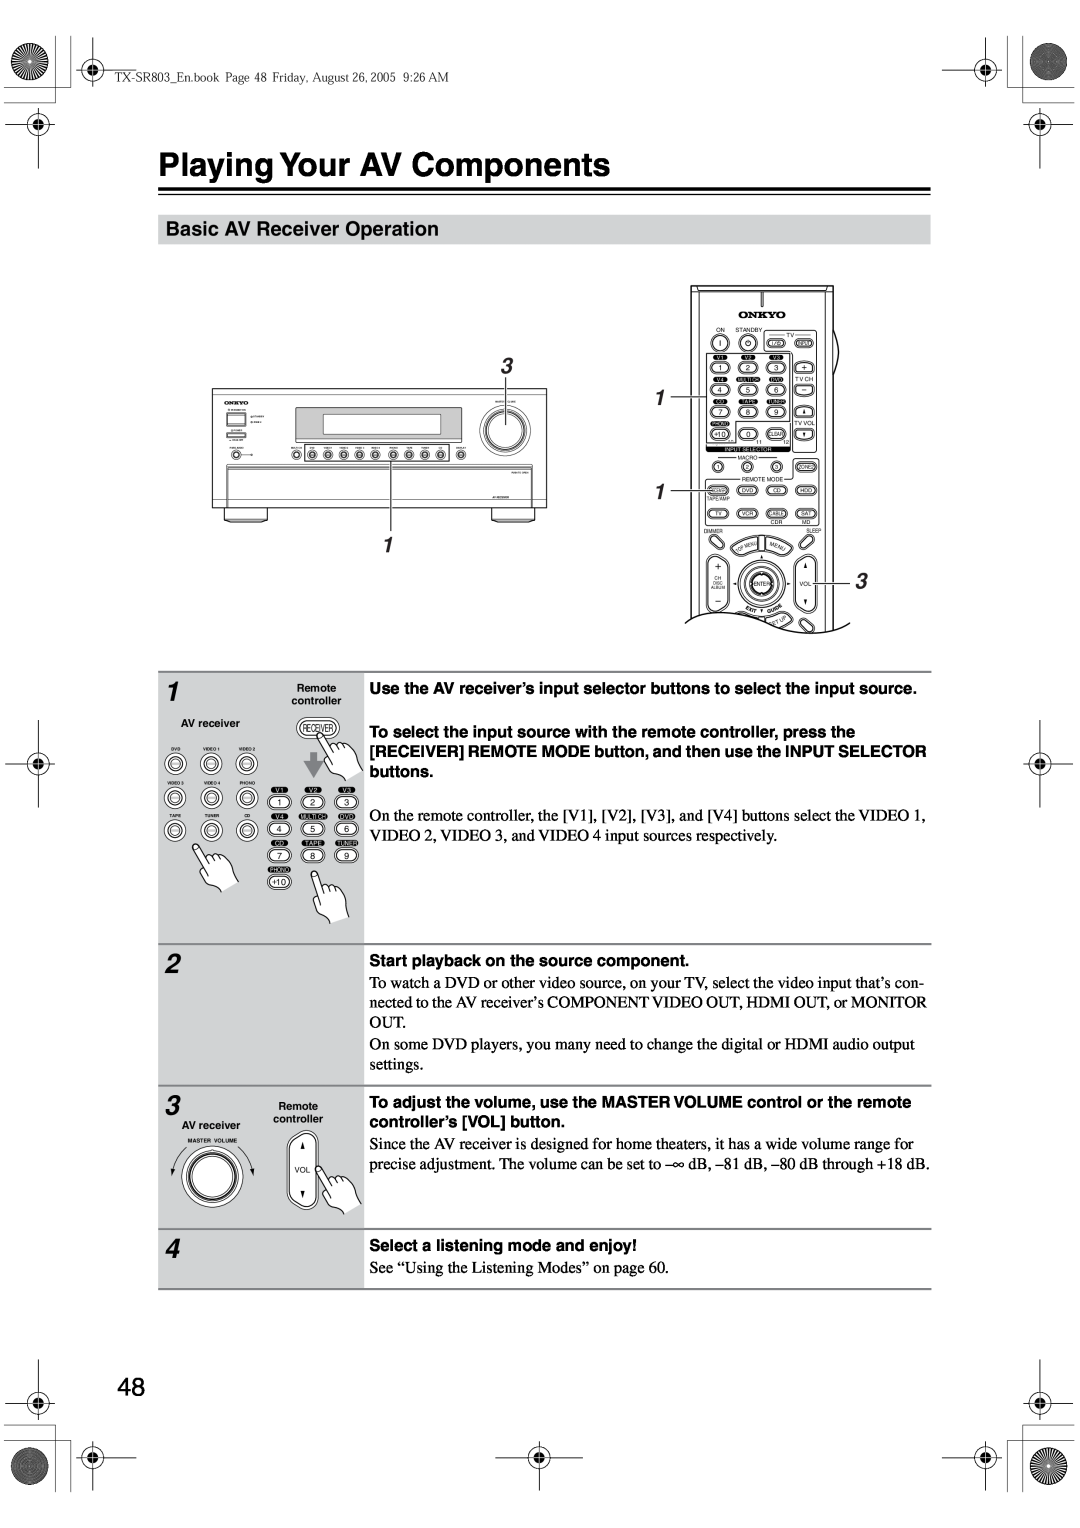 Onkyo TX-SR 803E, TX-SR8370, TX-SR803, TX-SR703E instruction manual Playing Your AV Components, Basic AV Receiver Operation 